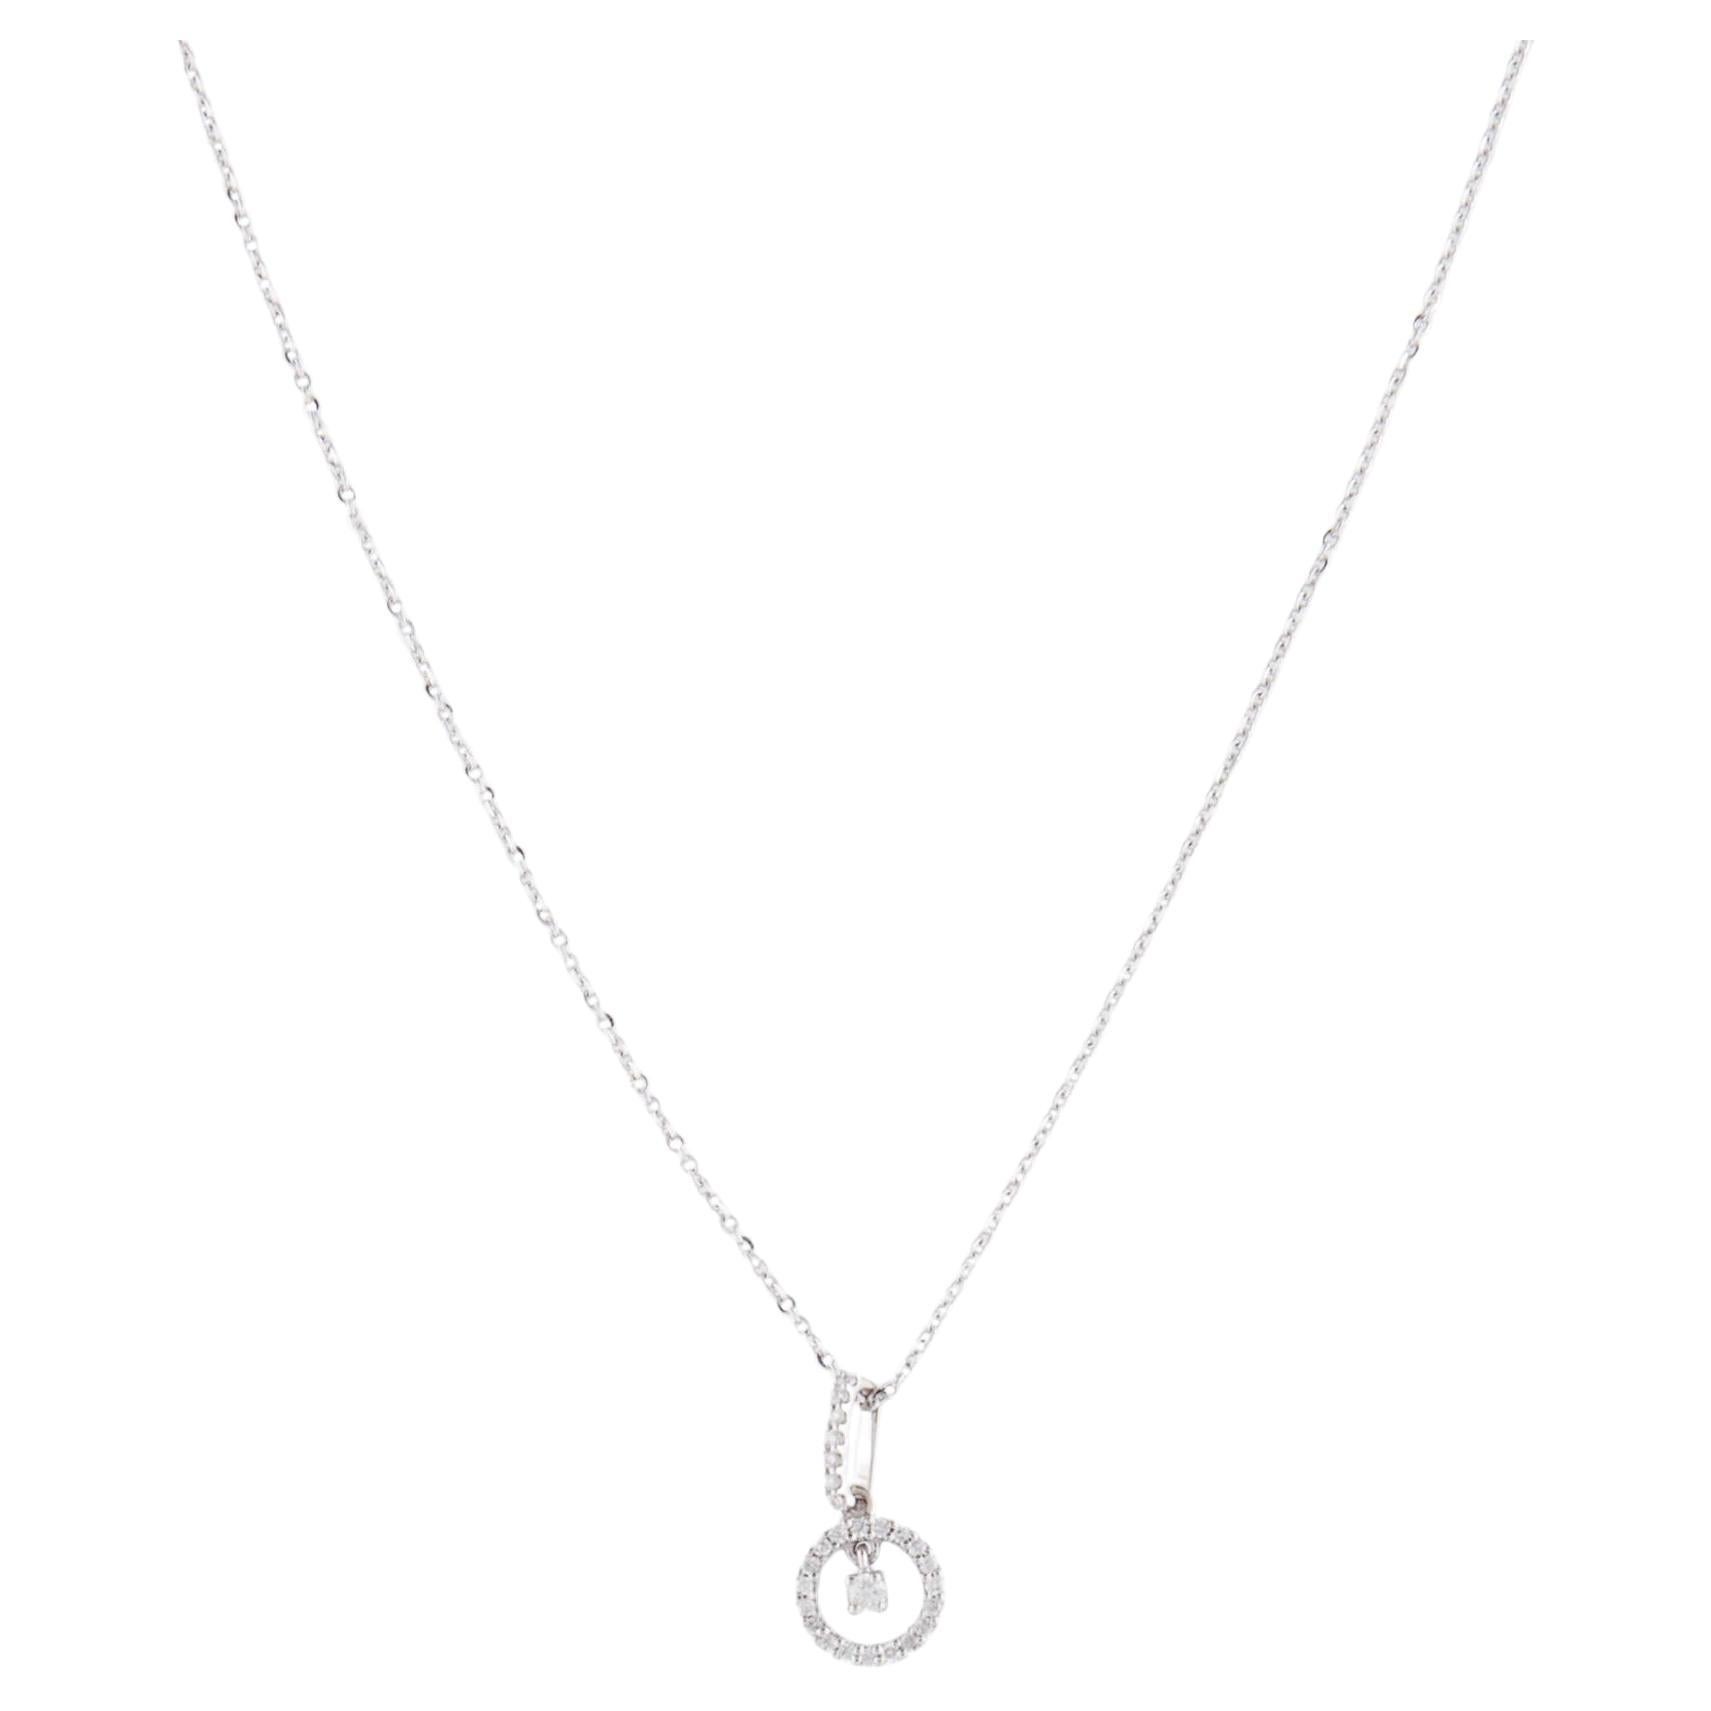 Luxury 14K Diamond Pendant Necklace - Exquisite Statement Piece in White Gold